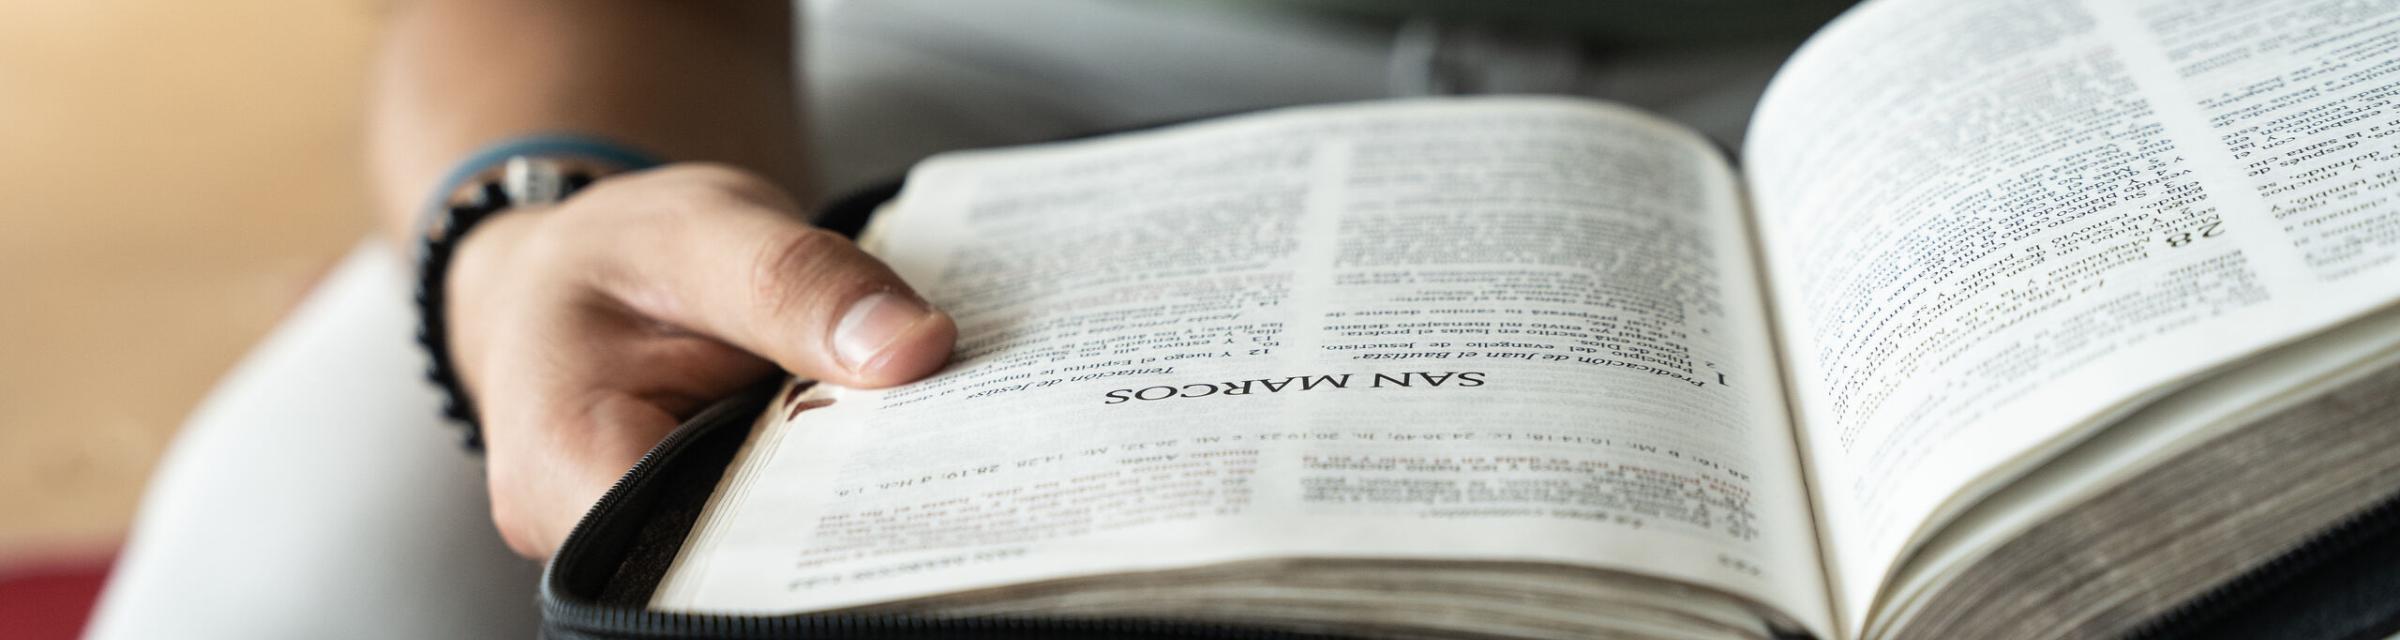 A man flips through a Spanish Bible. Photo by RJ Rempel